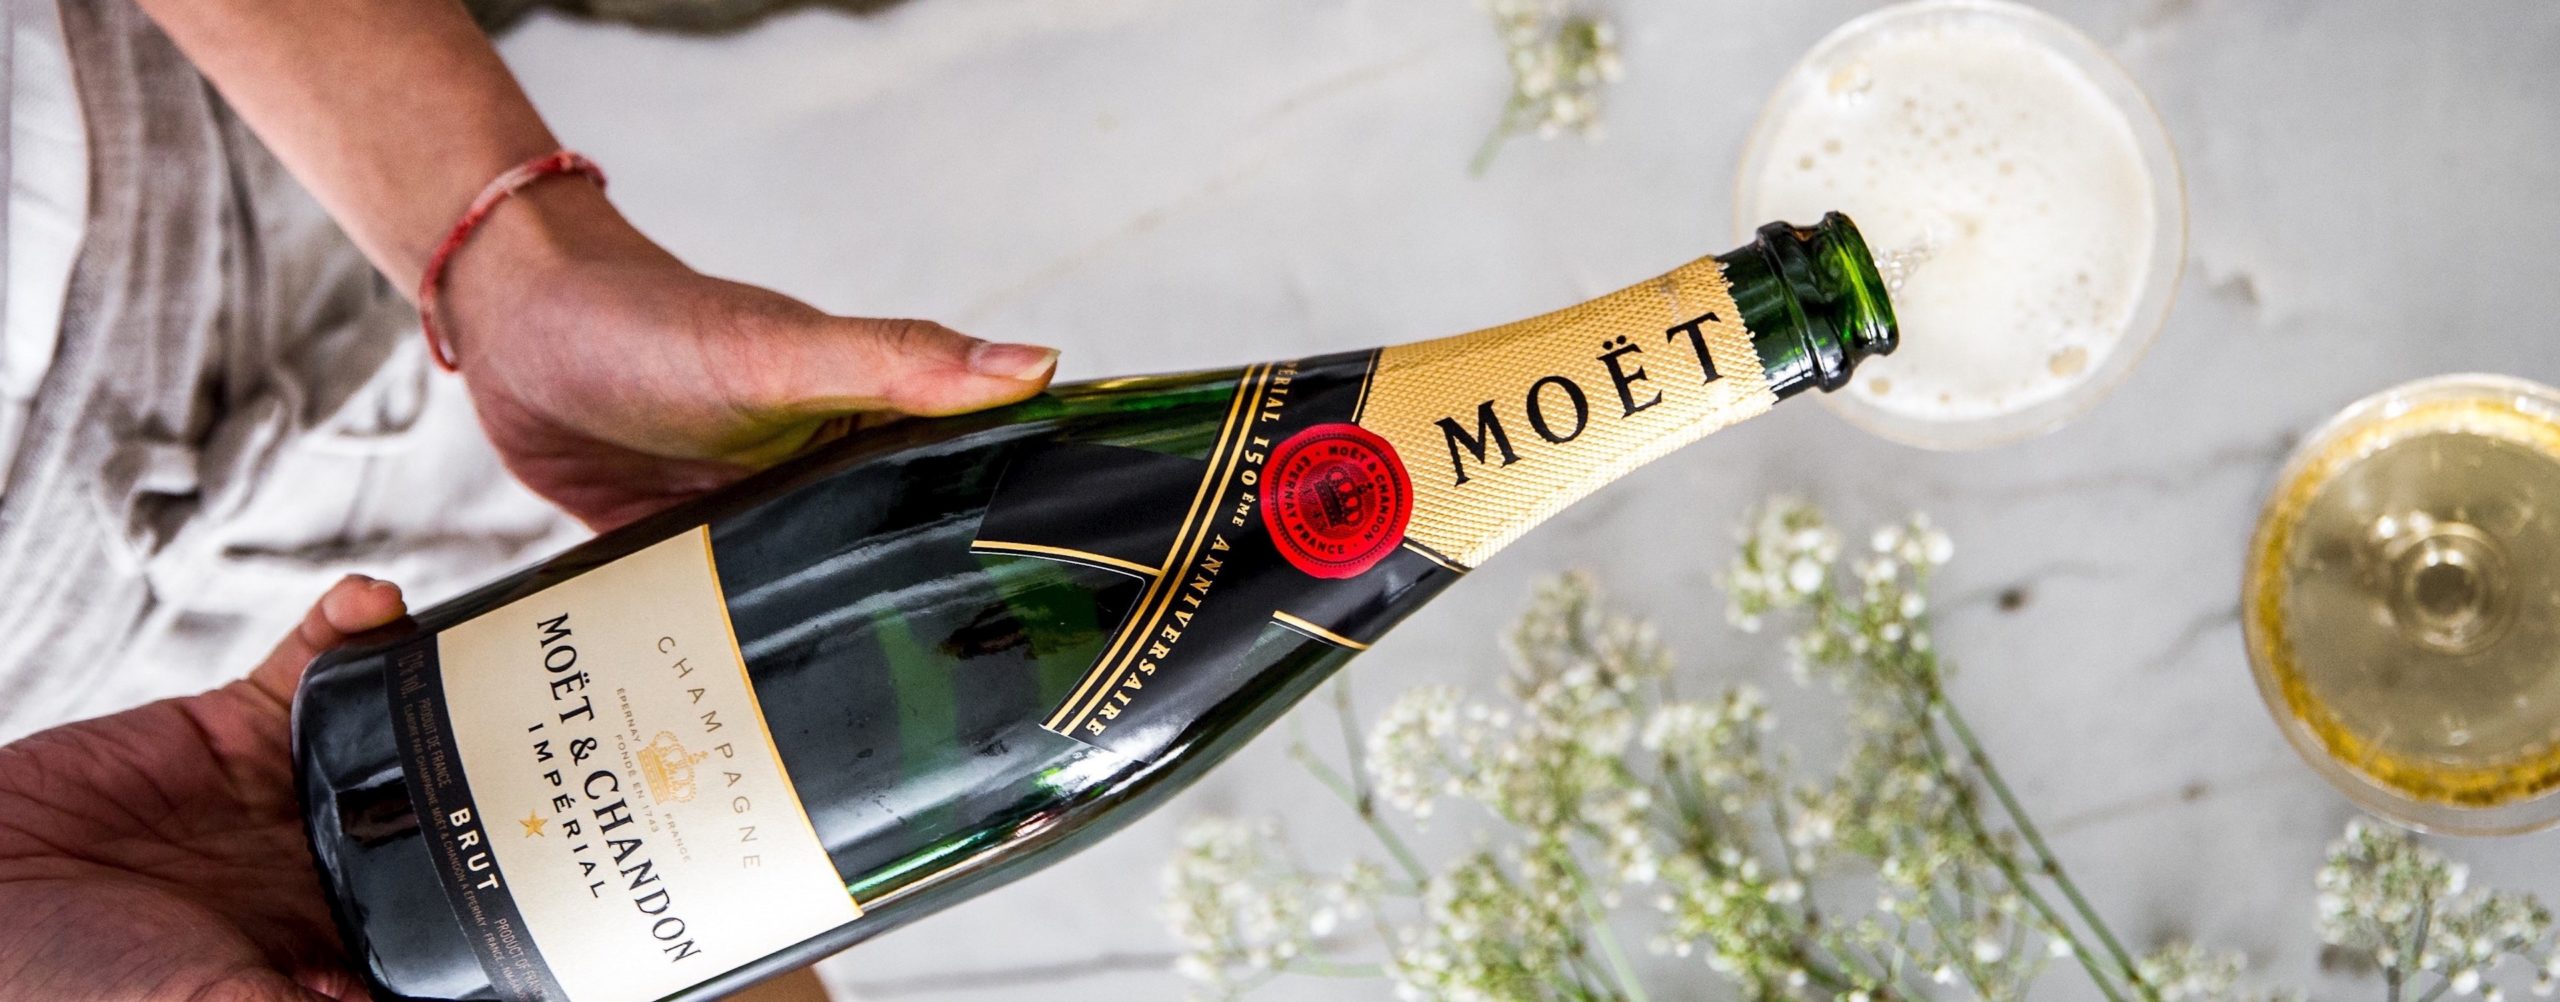 A bottle of Moet & Chandon Champagne